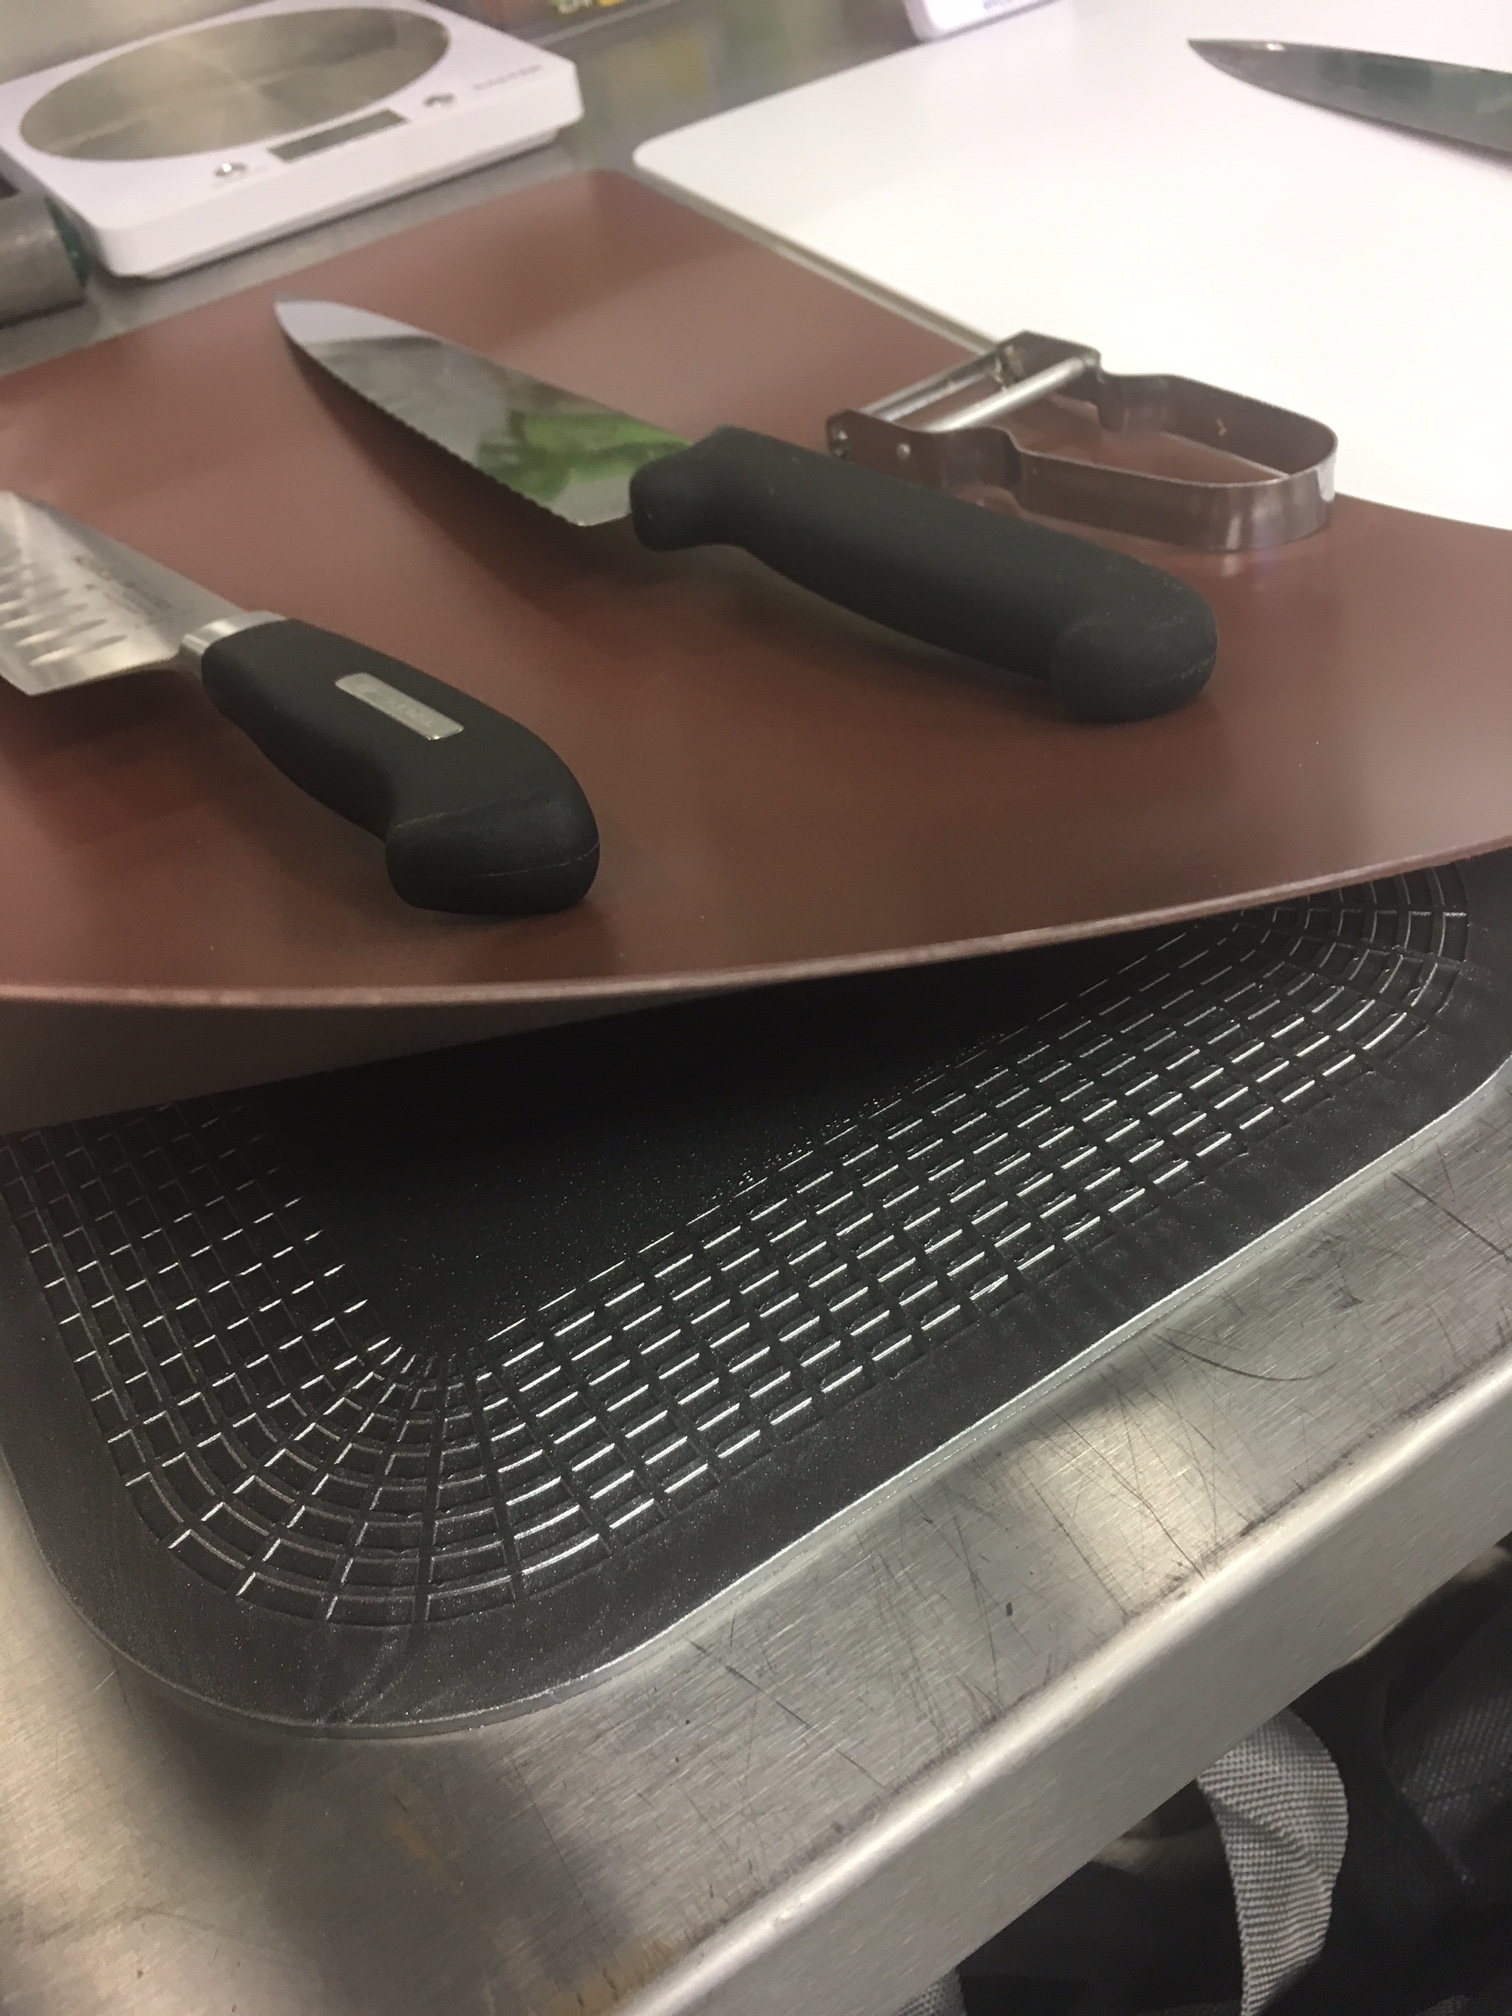 Chef uses Dycem Non-Slip Mat under chopping board - Dycem Non Slip